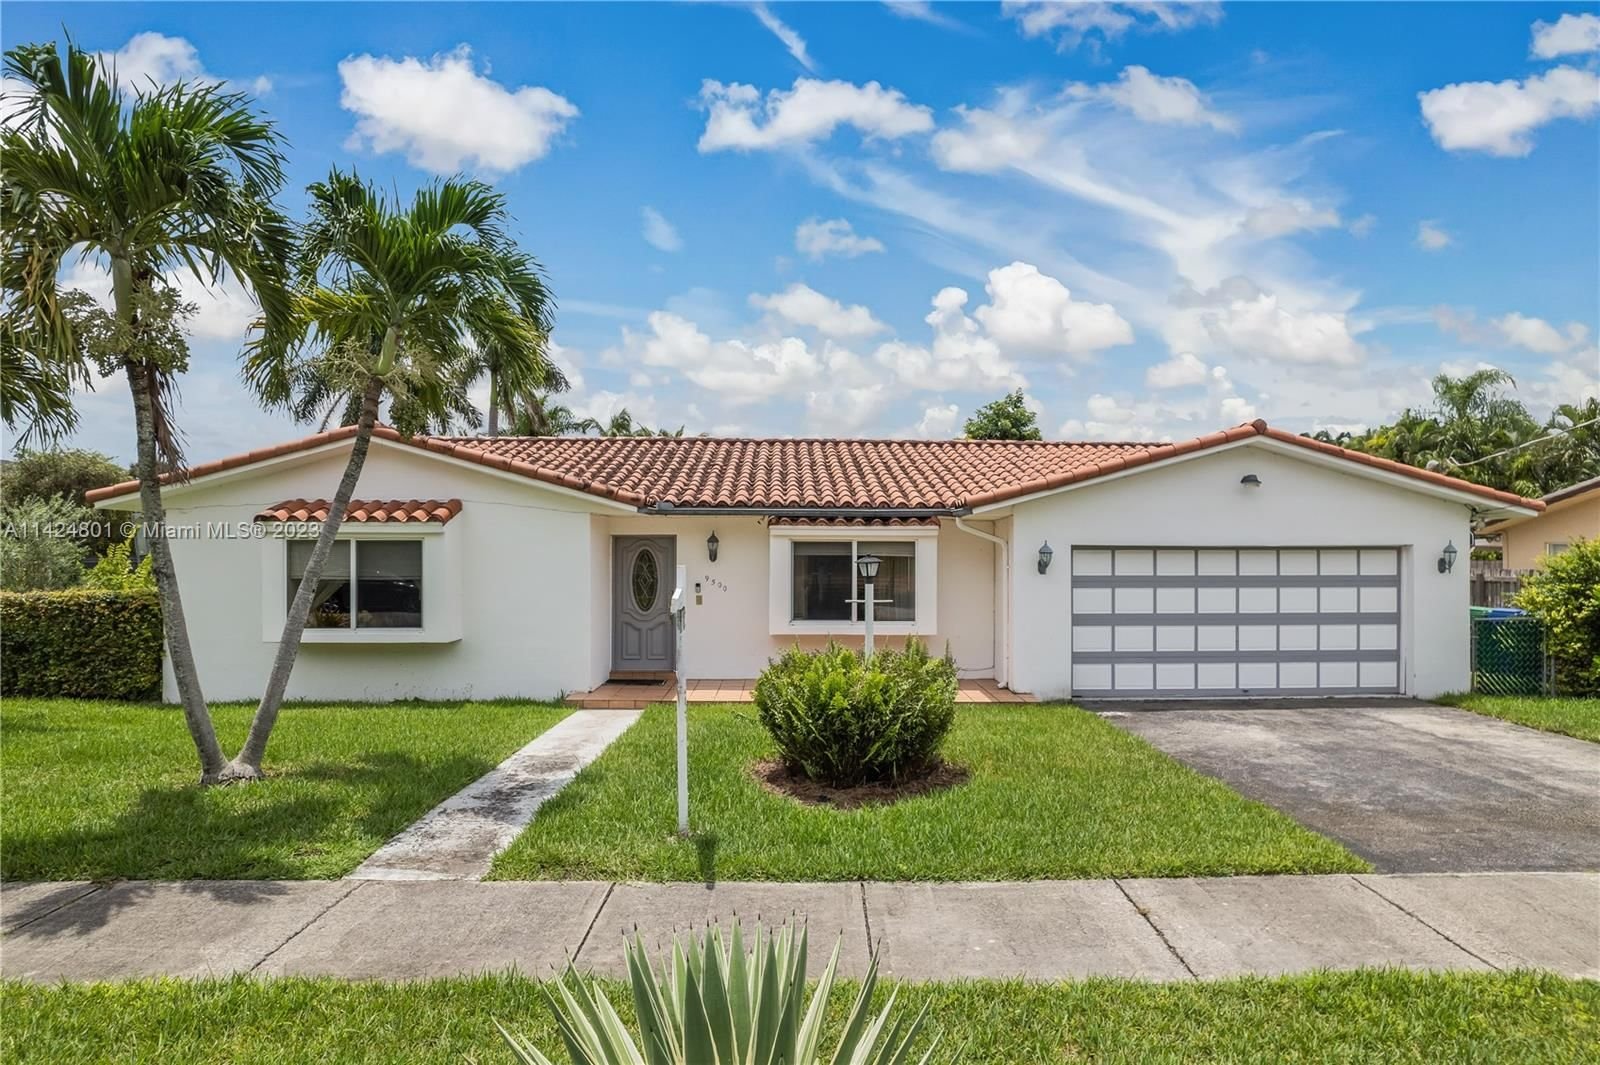 Real estate property located at 9500 64th St, Miami-Dade County, SUB OF PB 3-169, Miami, FL